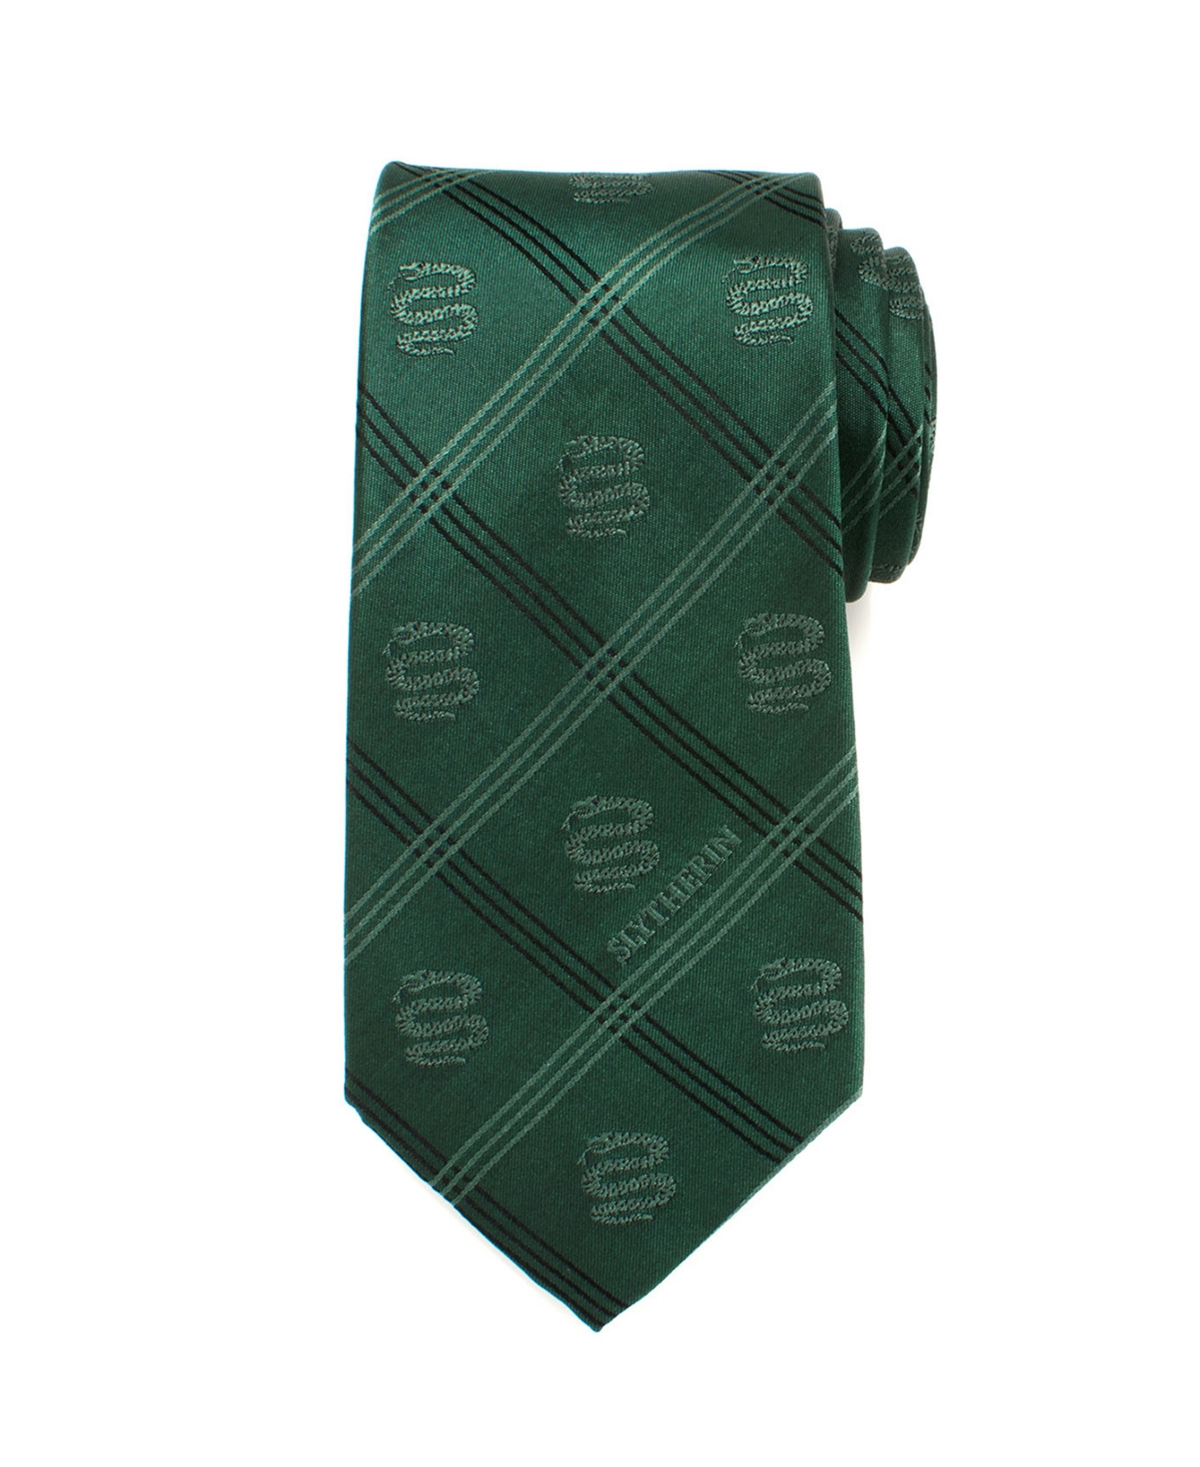 Slytherin Plaid Men's Tie - Green